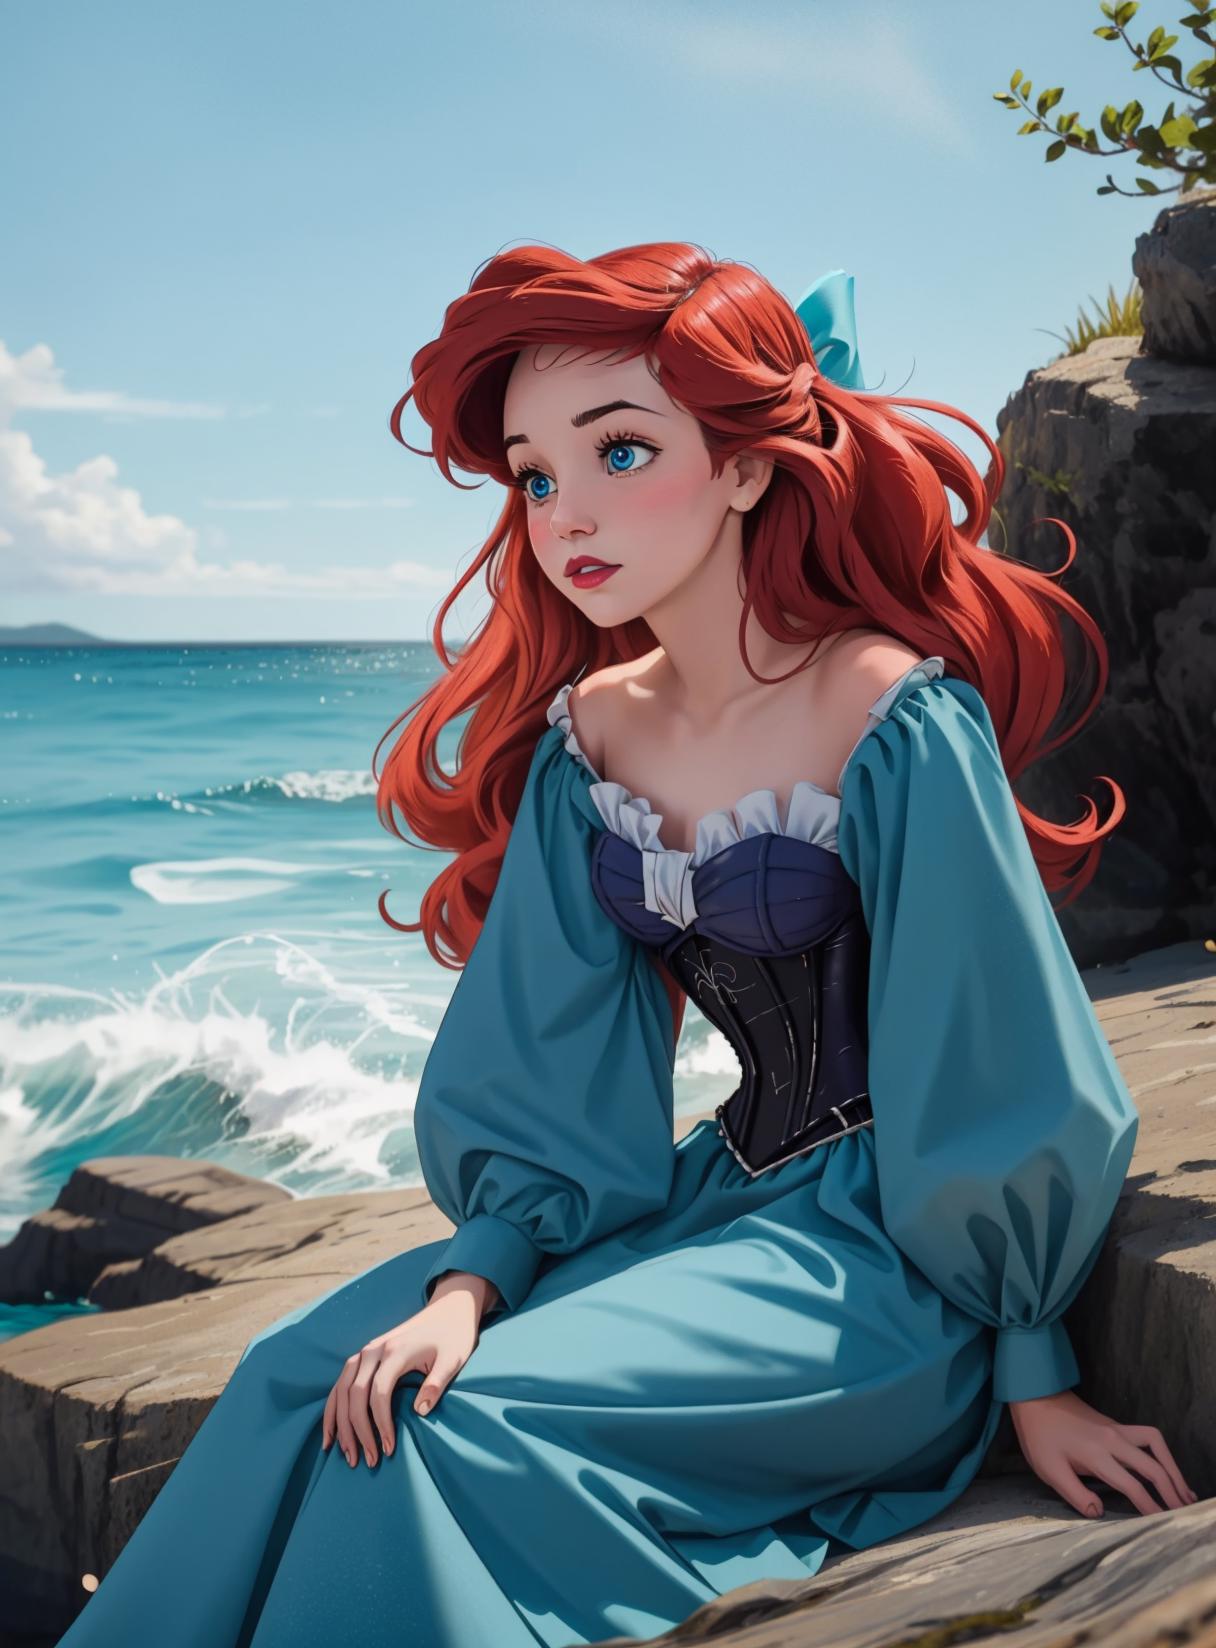 Ariel (The Little Mermaid) Princess Disney, by YeiyeiArt image by Jerrri